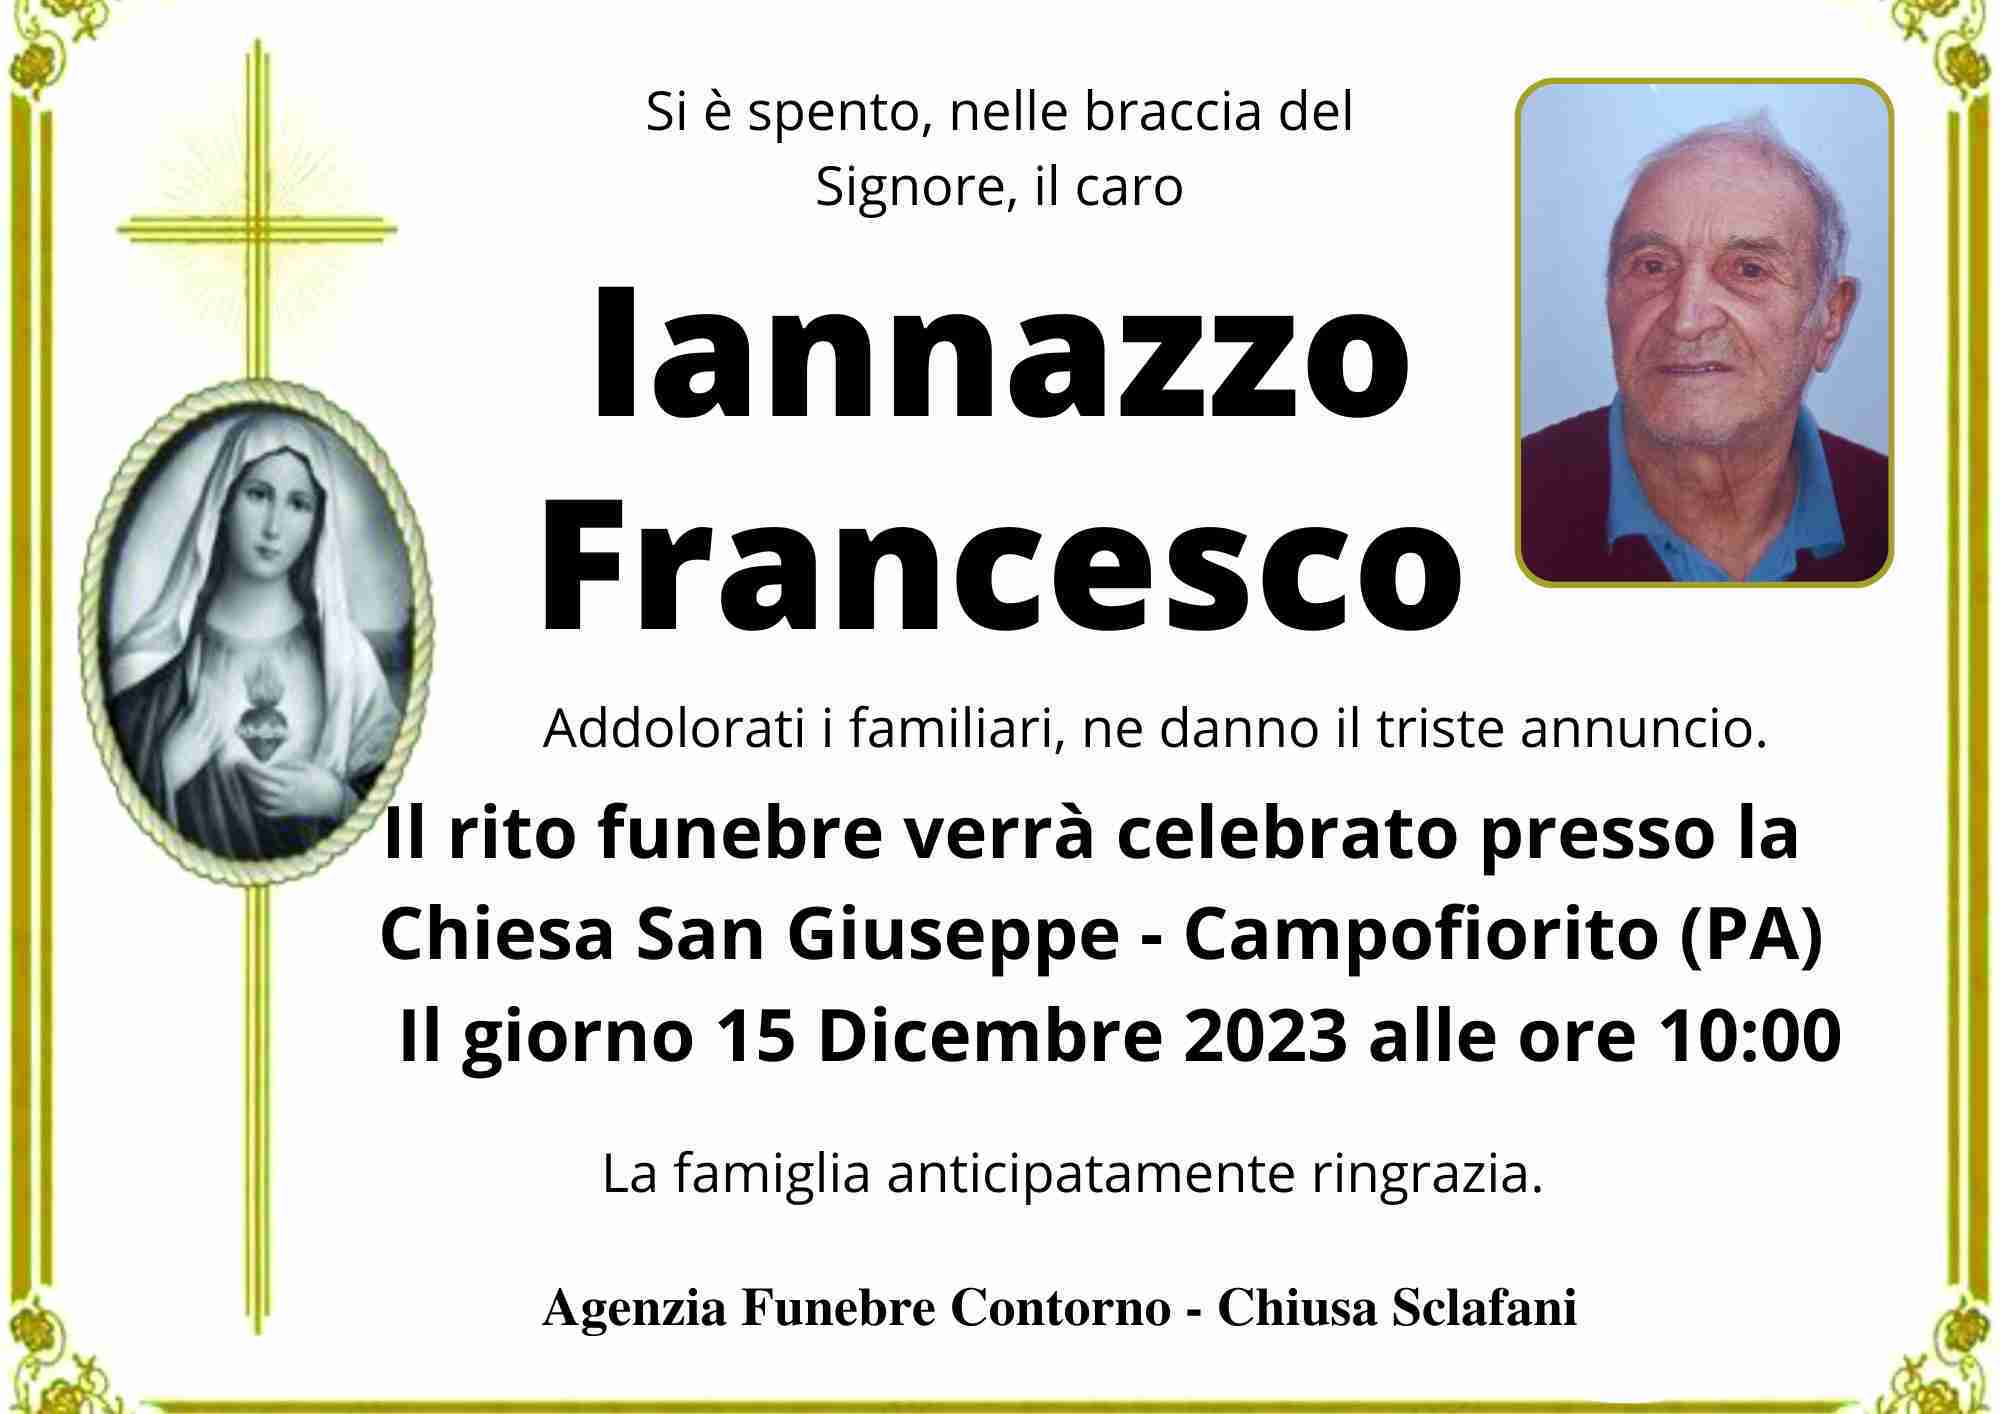 Francesco Iannazzo